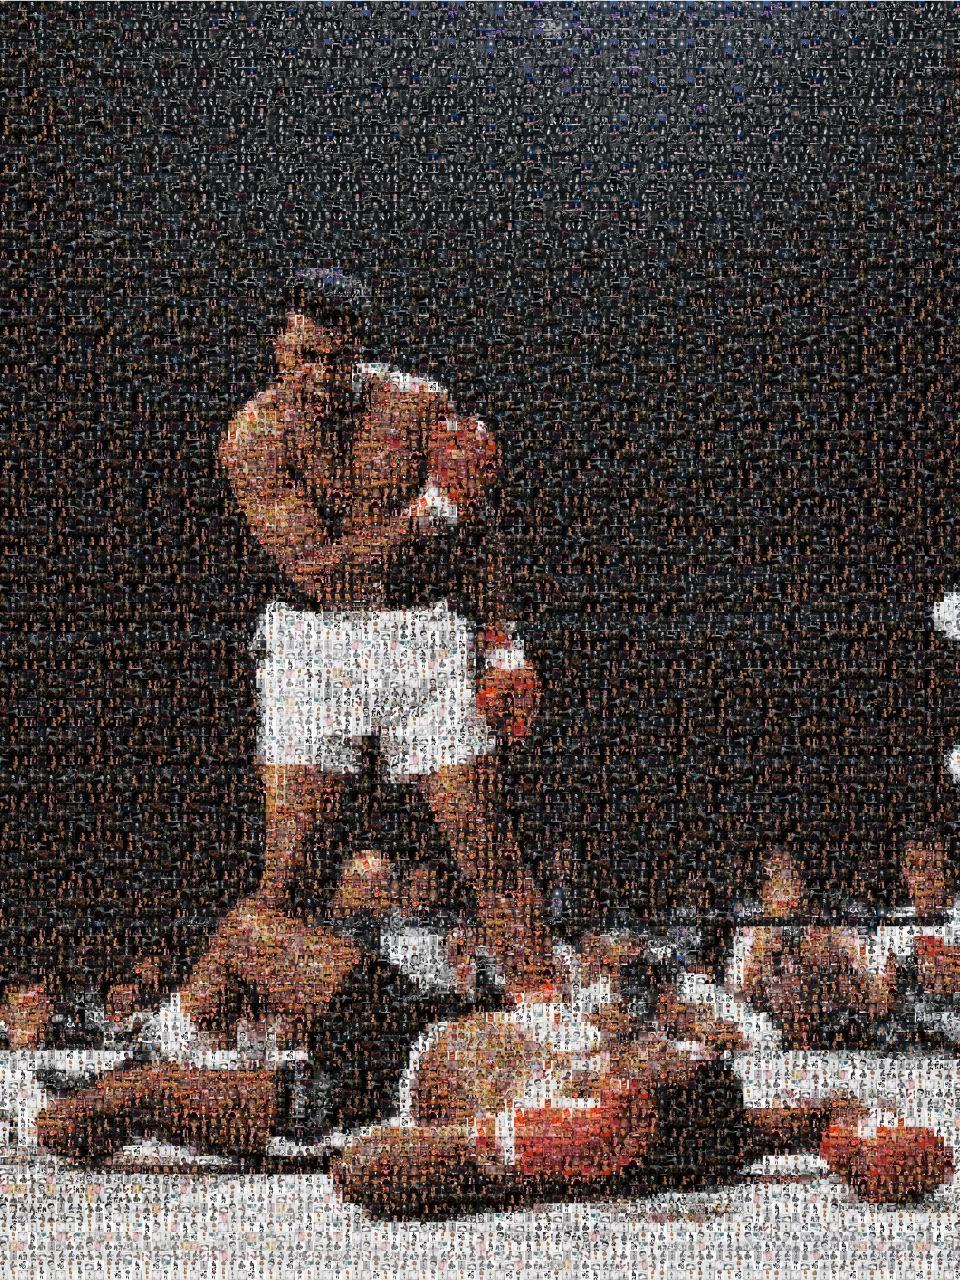 Destro Black and White Photograph - "Ali" Muhammad Ali Portrait 60x45 Photomosaic Photography Pop Art  Photograph